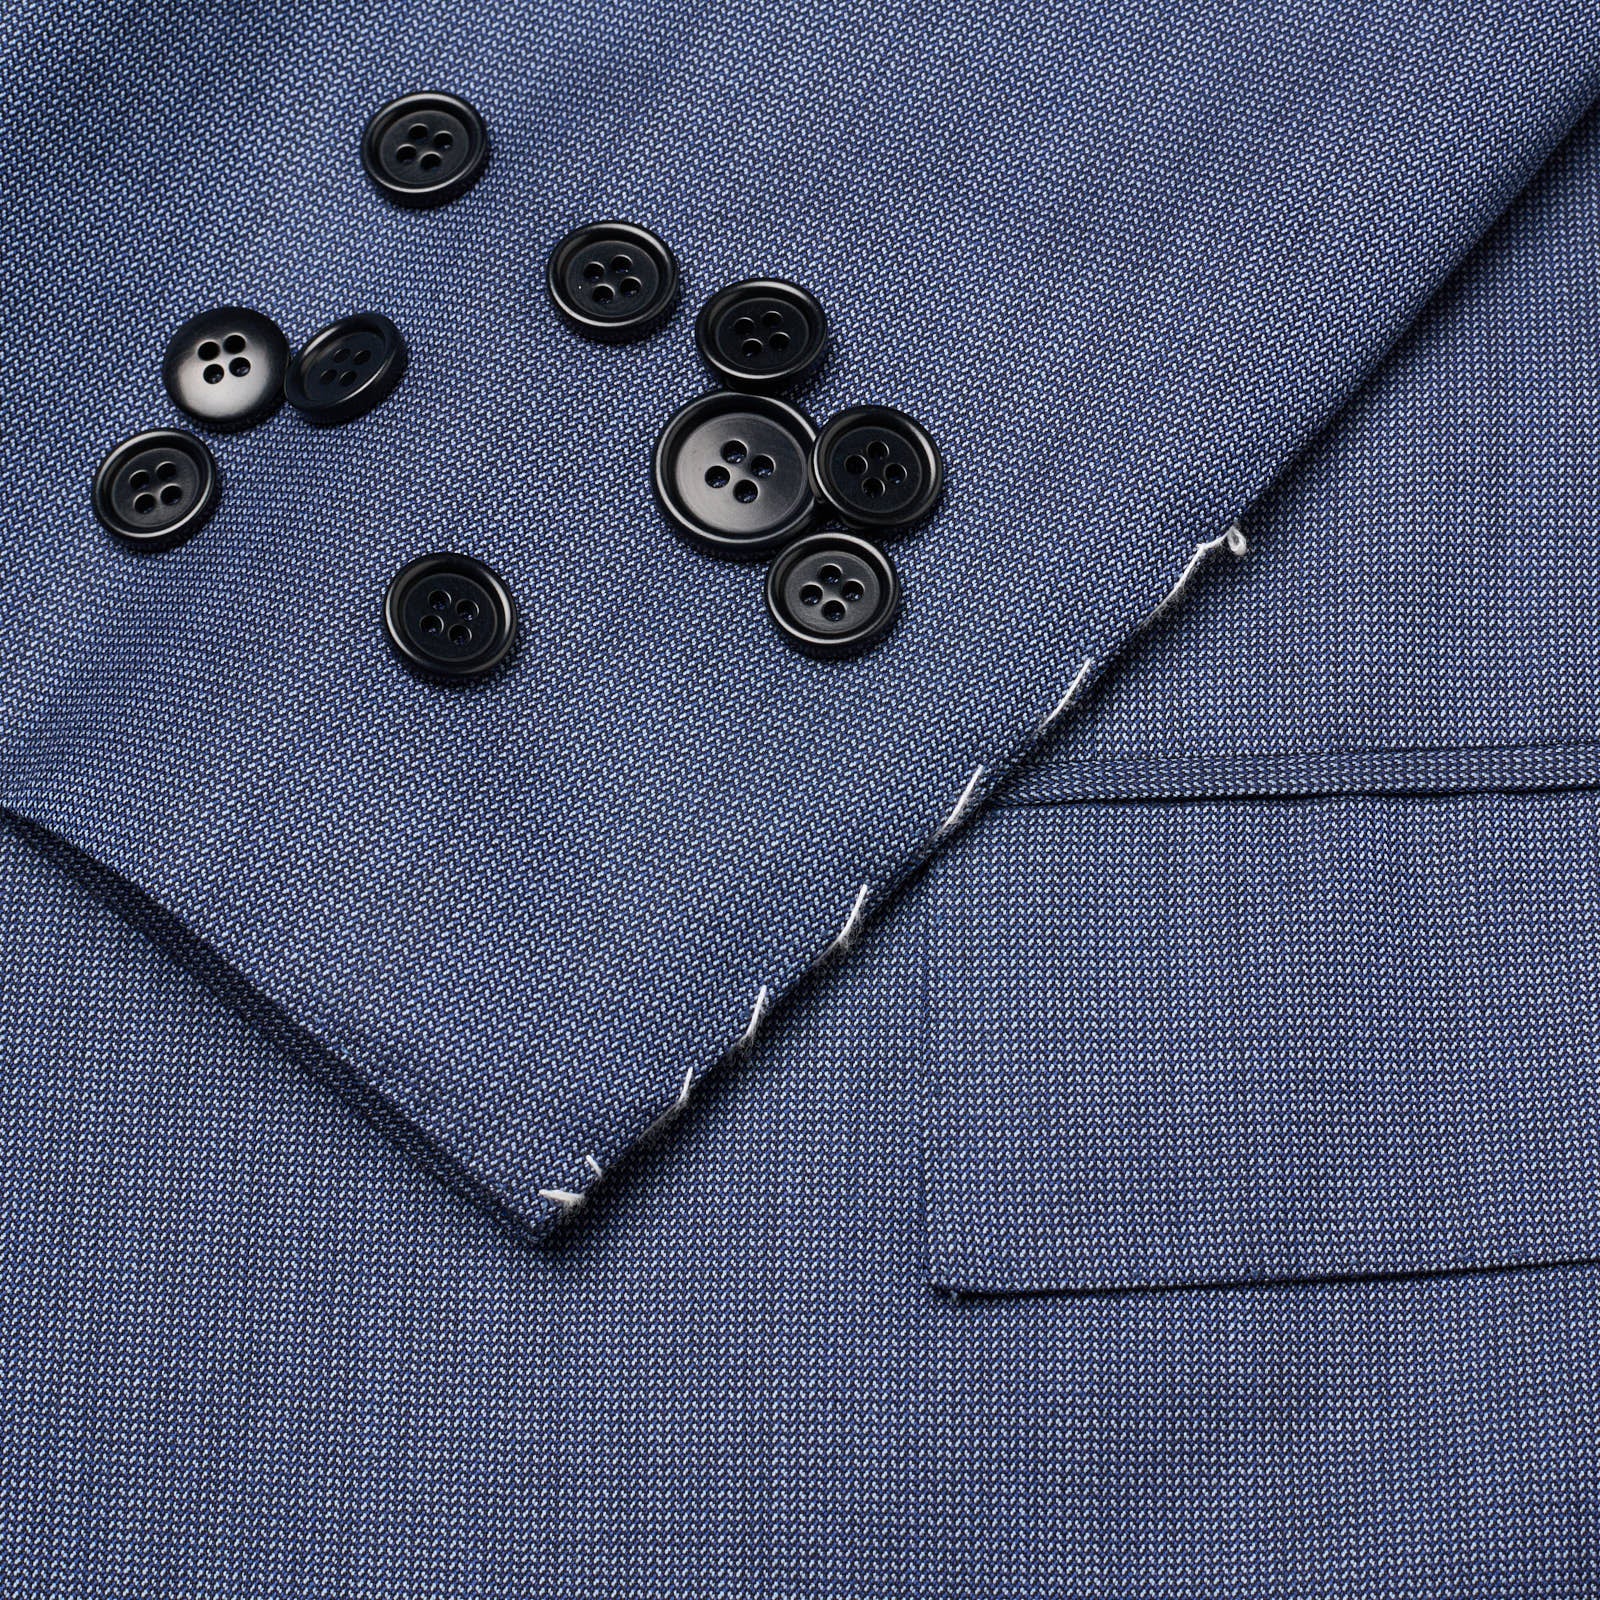 KITON Napoli for VANNUCCI Handmade Blue Wool Jacket EU 50 NEW US 40